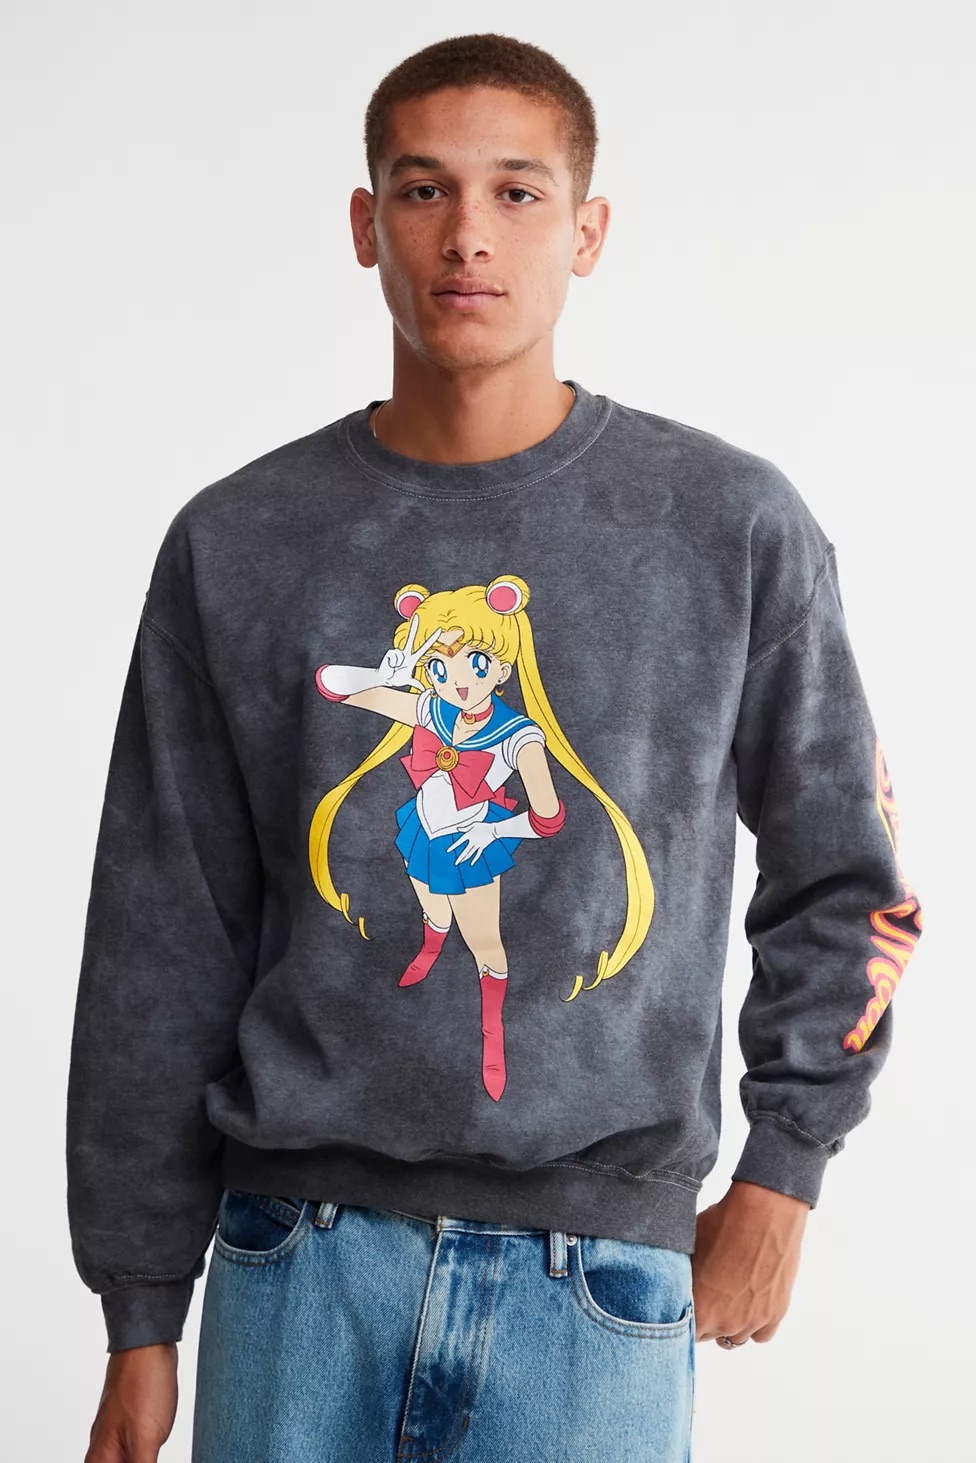 Urban Outfitters: Sailor Moon Tie-Dye Crew Neck Sweatshirt |